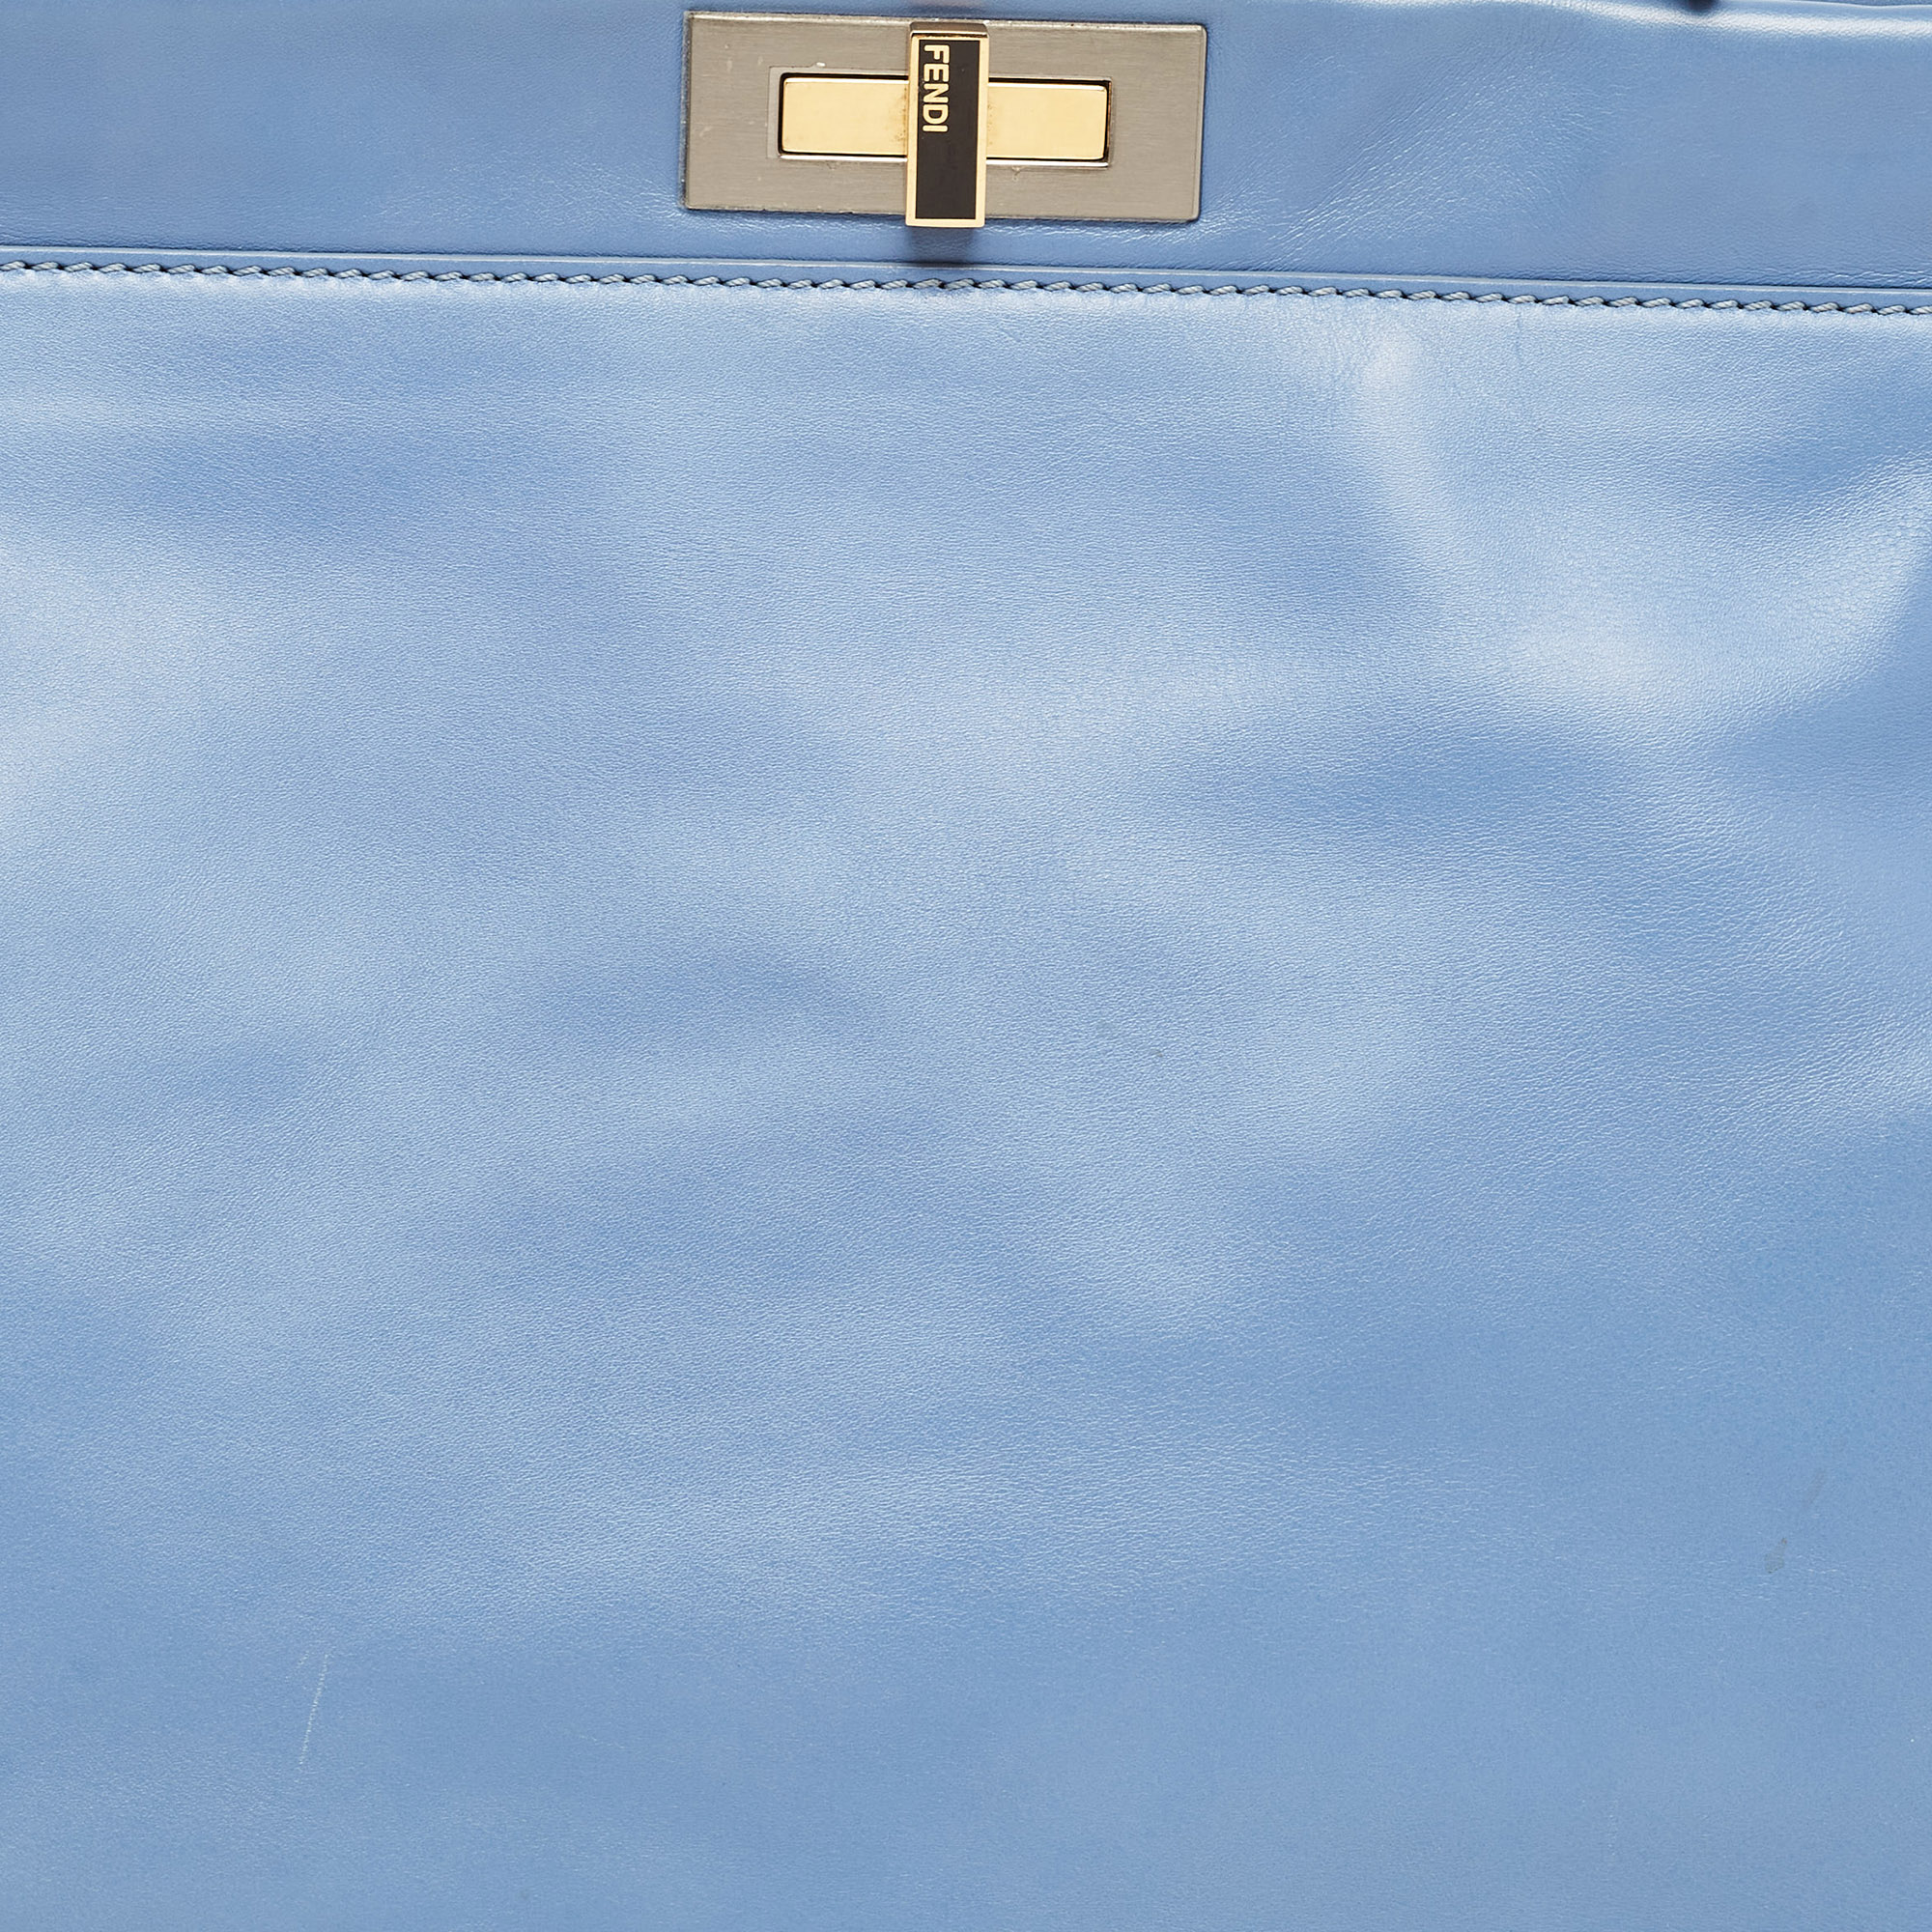 Fendi Blue Leather Large Peekaboo Top Handle Bag